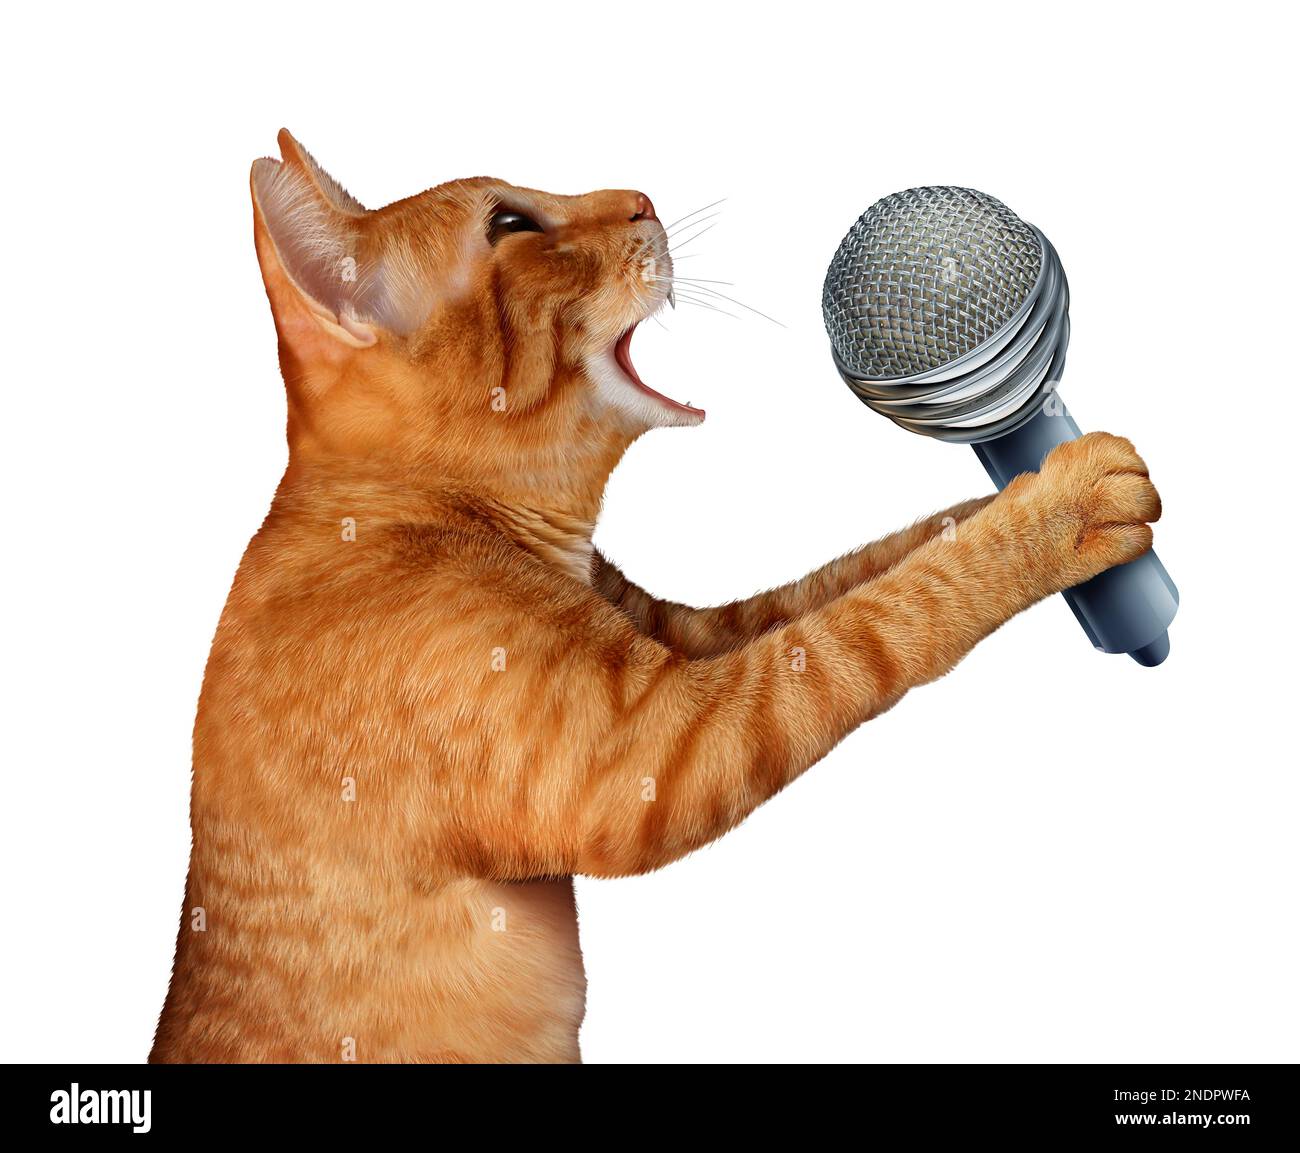 Cantar gato como un felino genérico sosteniendo un micrófono para maullar o maullar para anunciar noticias o promover problemas de mascotas y veterinarios o comercialización de animales Foto de stock